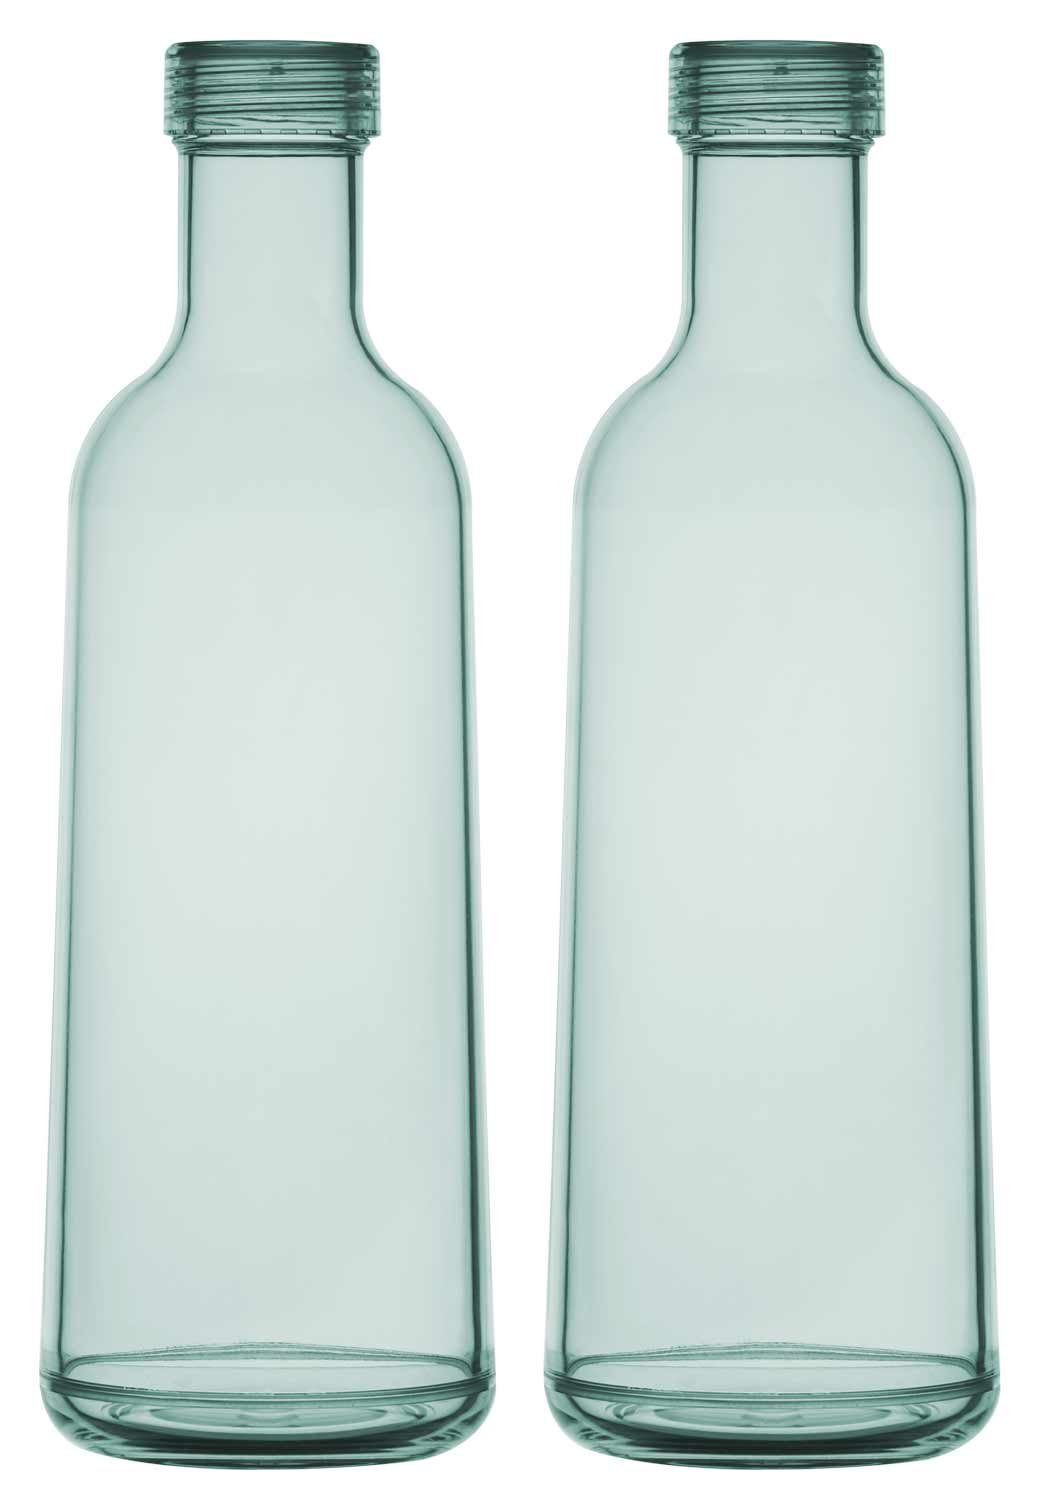 Marine Business Trinkflasche Zwei Flaschen Bahamas Natural